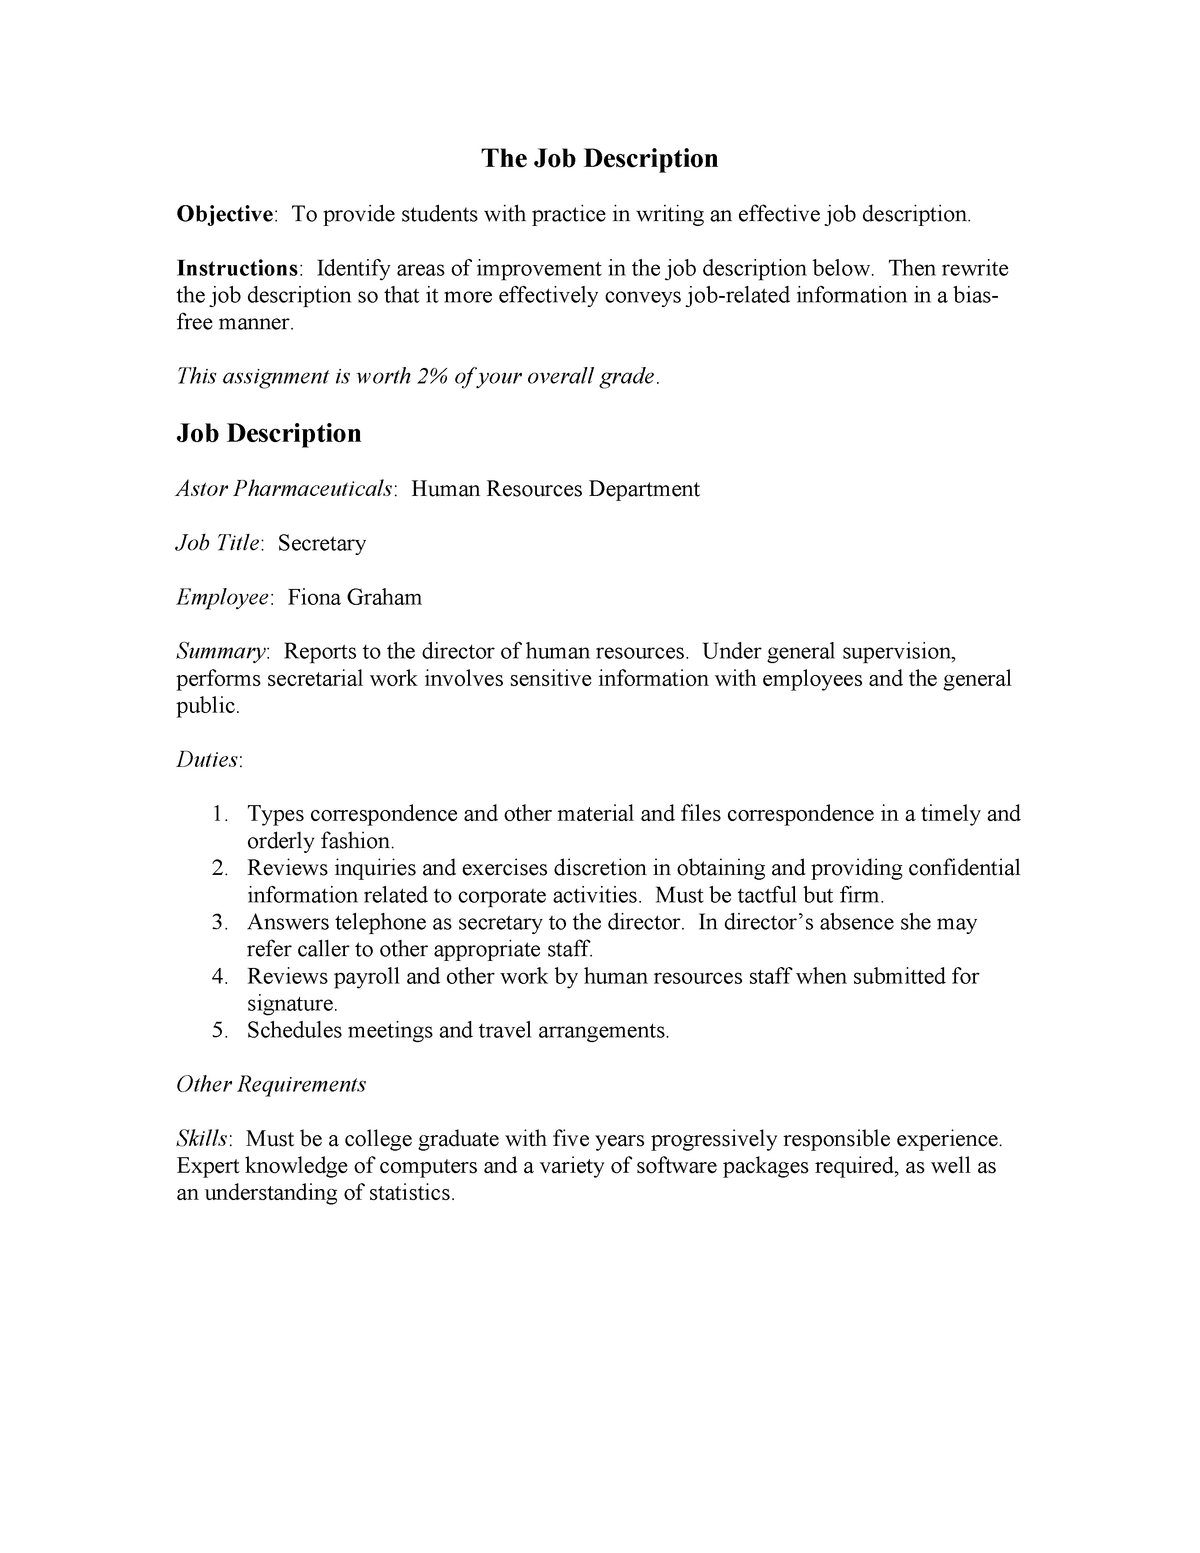 assignment description example